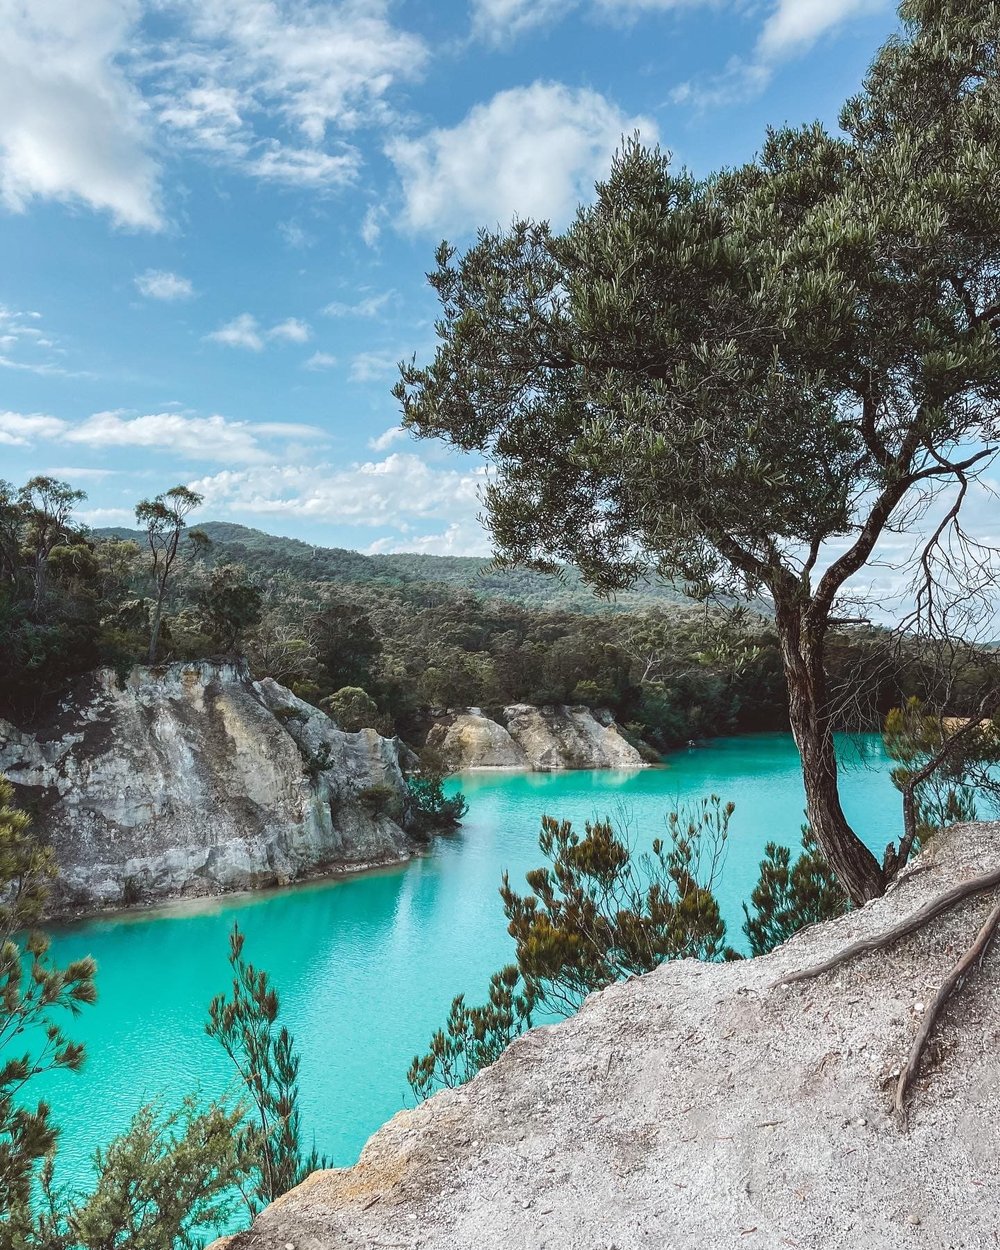 Stunning turquoise water - Little Blue Lake - Tasmania - Australia